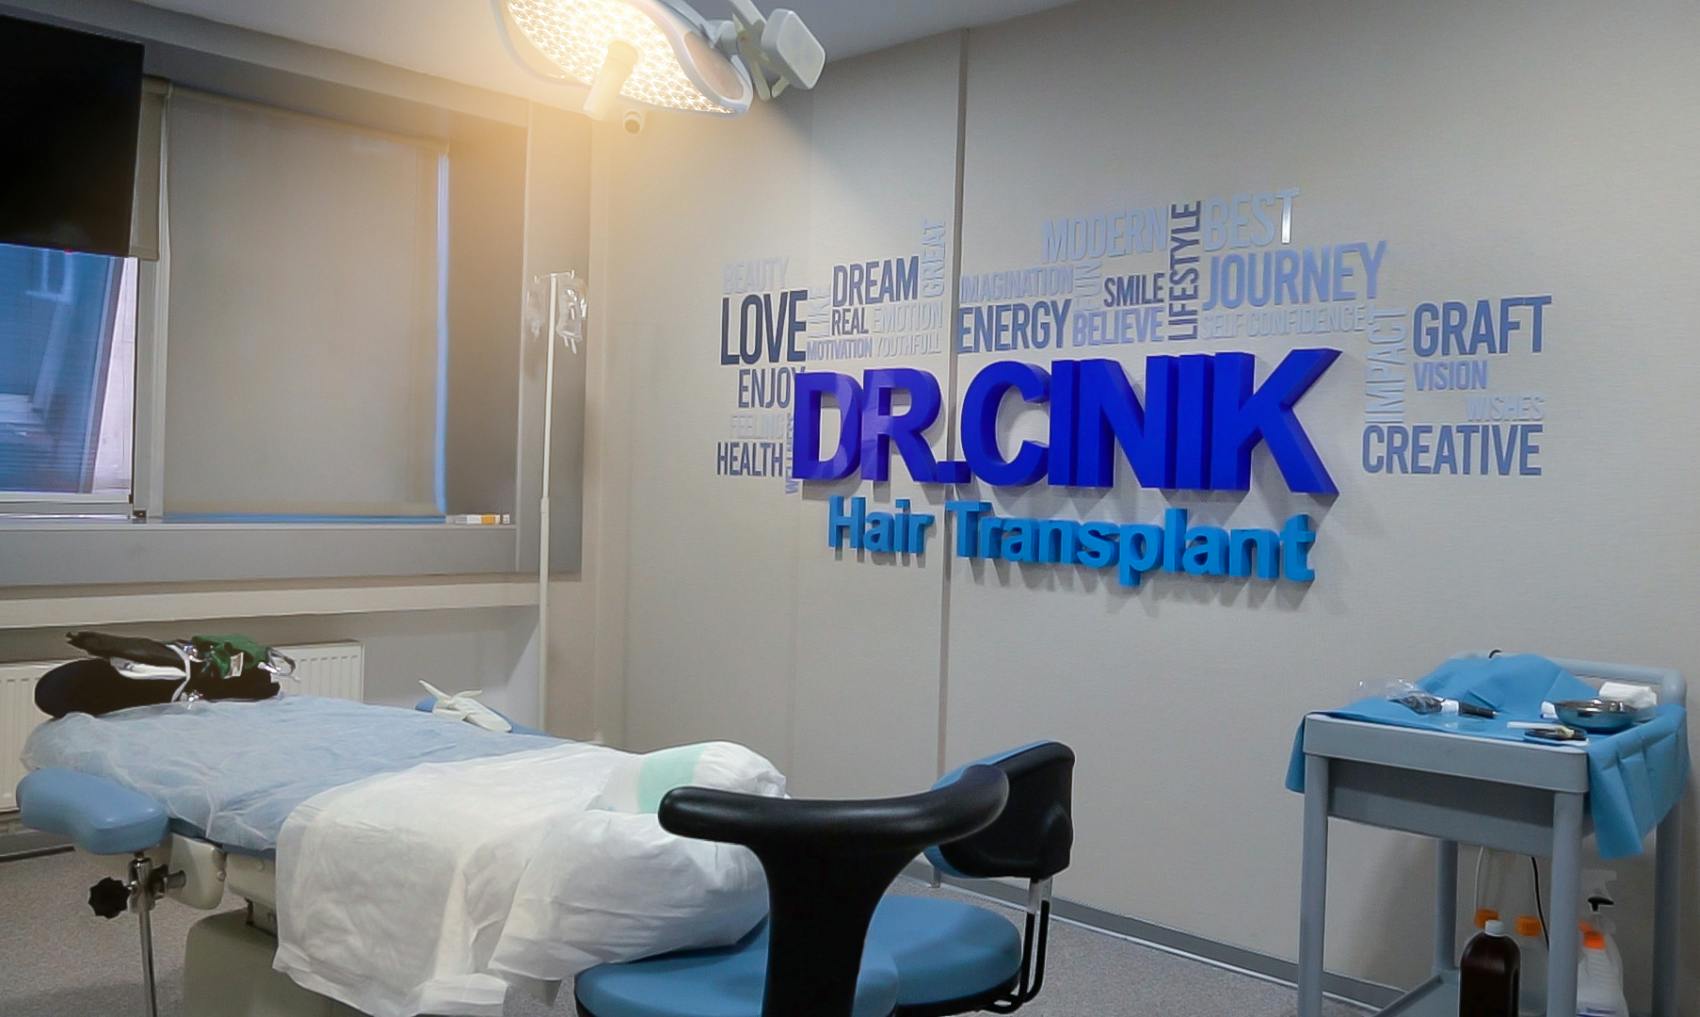 Dr. Cinik Hair Hospital